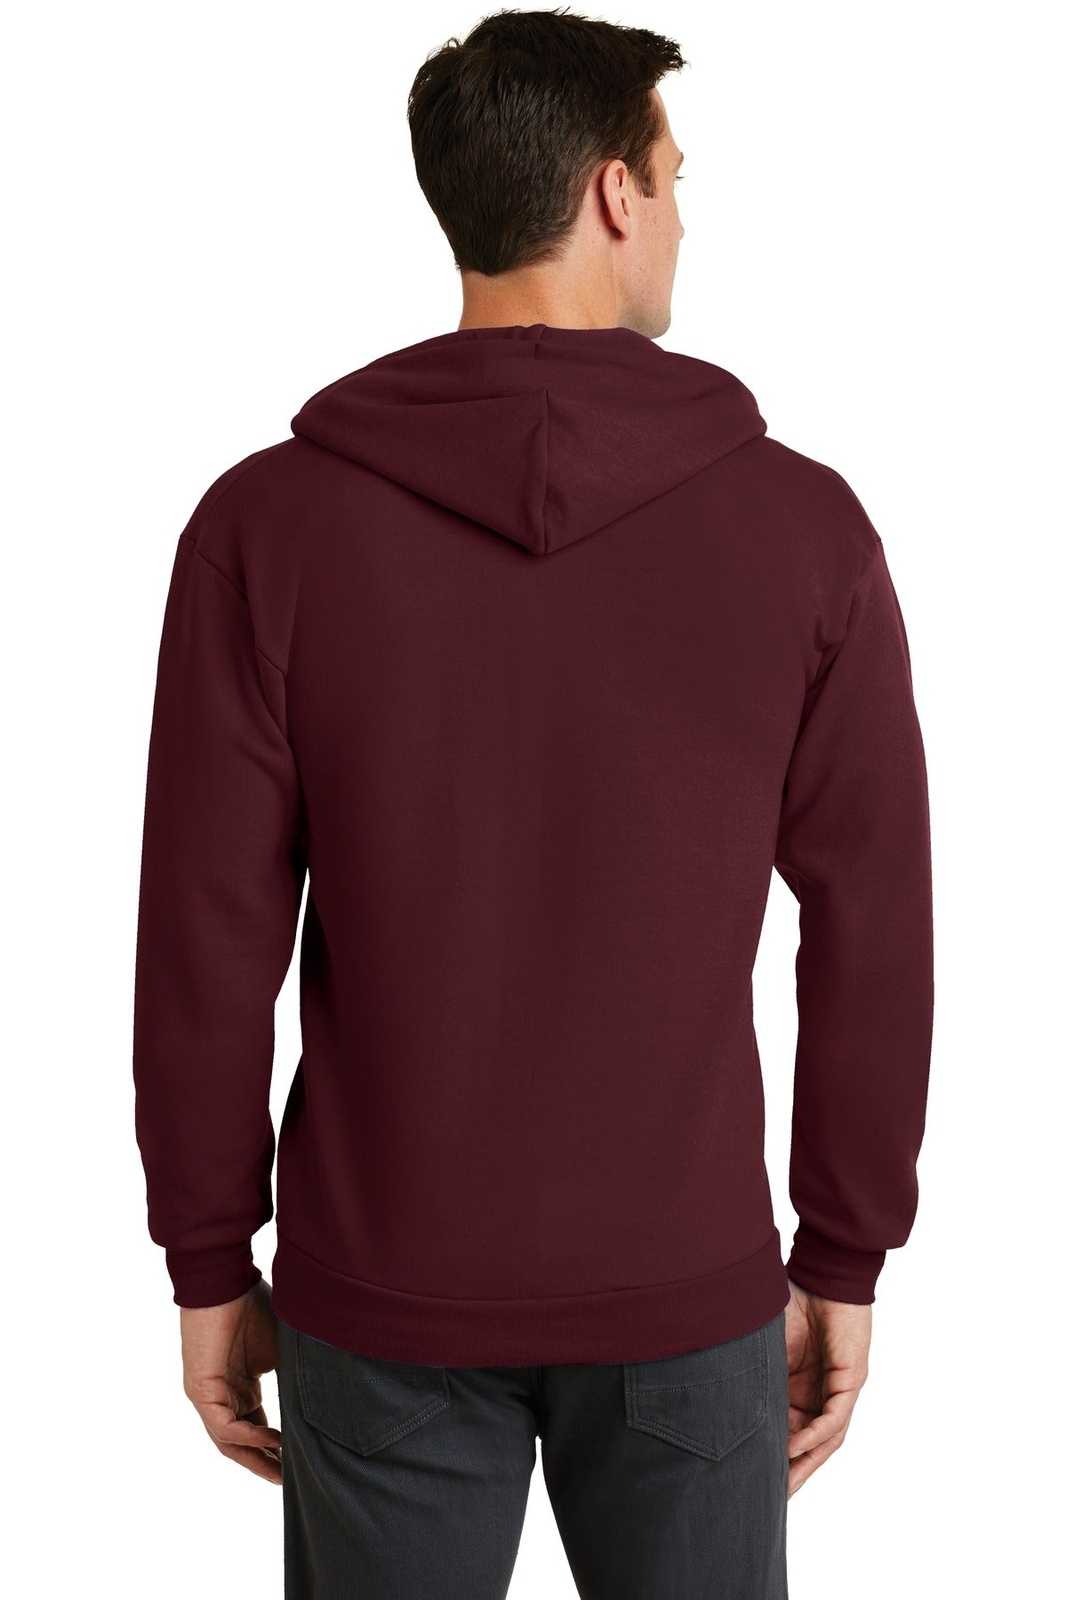 Port & Company PC78ZH Core Fleece Full-Zip Hooded Sweatshirt - Maroon - HIT a Double - 1